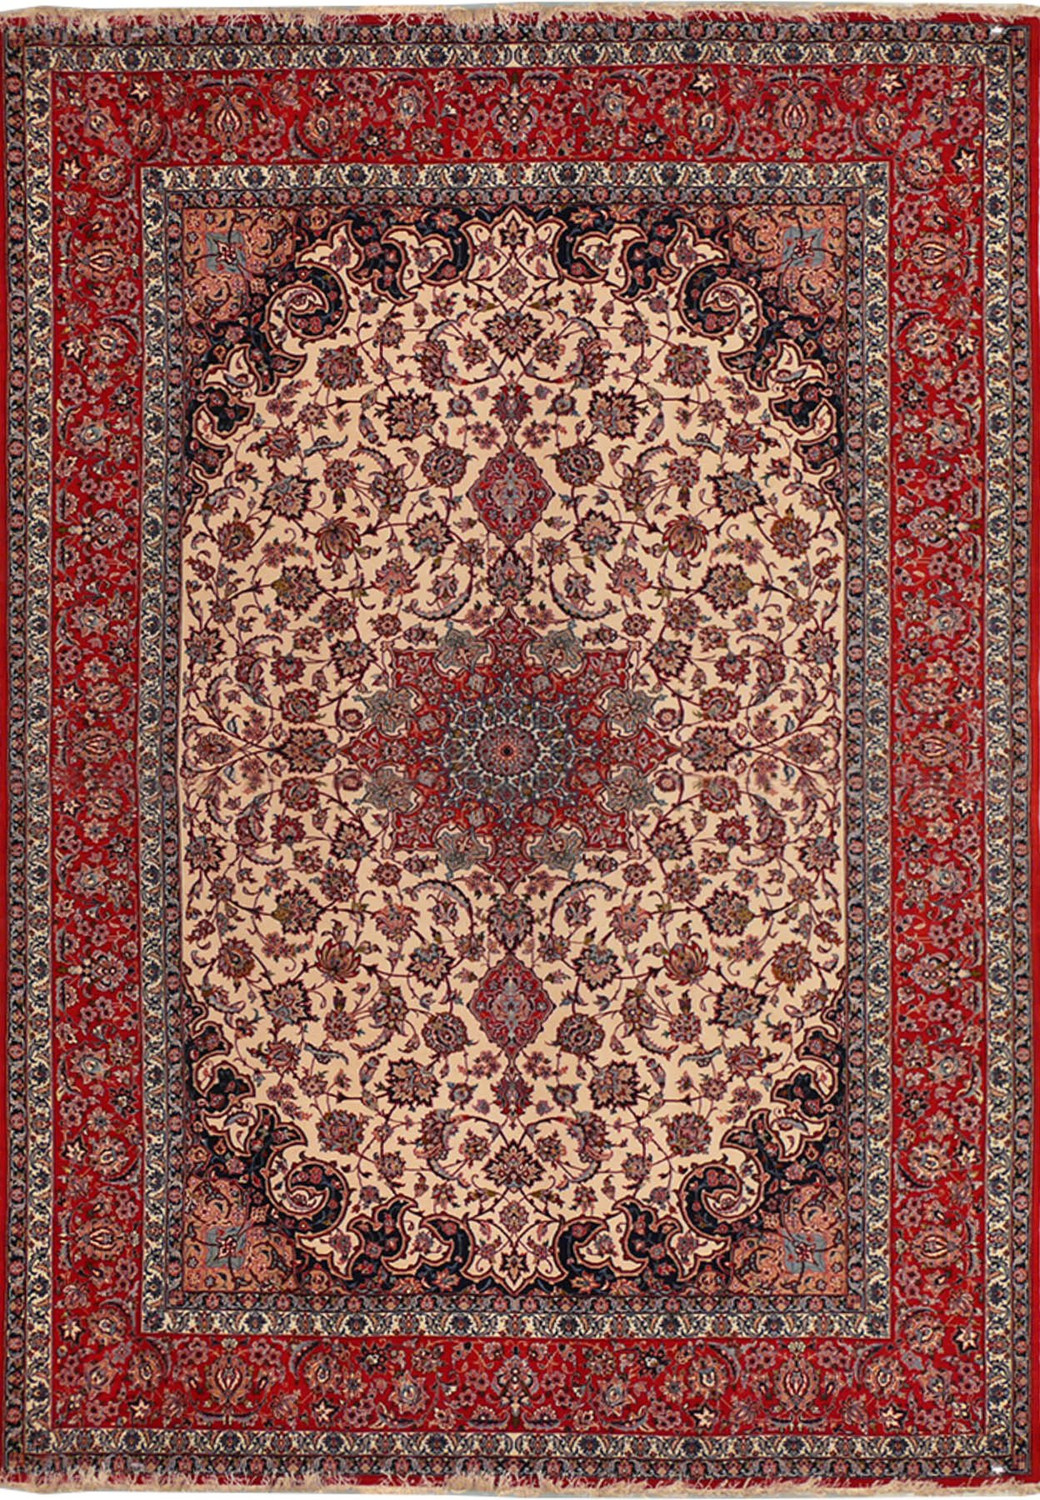 8'2 x 11'6 Premium High End Persian Isfahan Wool & Silk Rug - Rugs.net